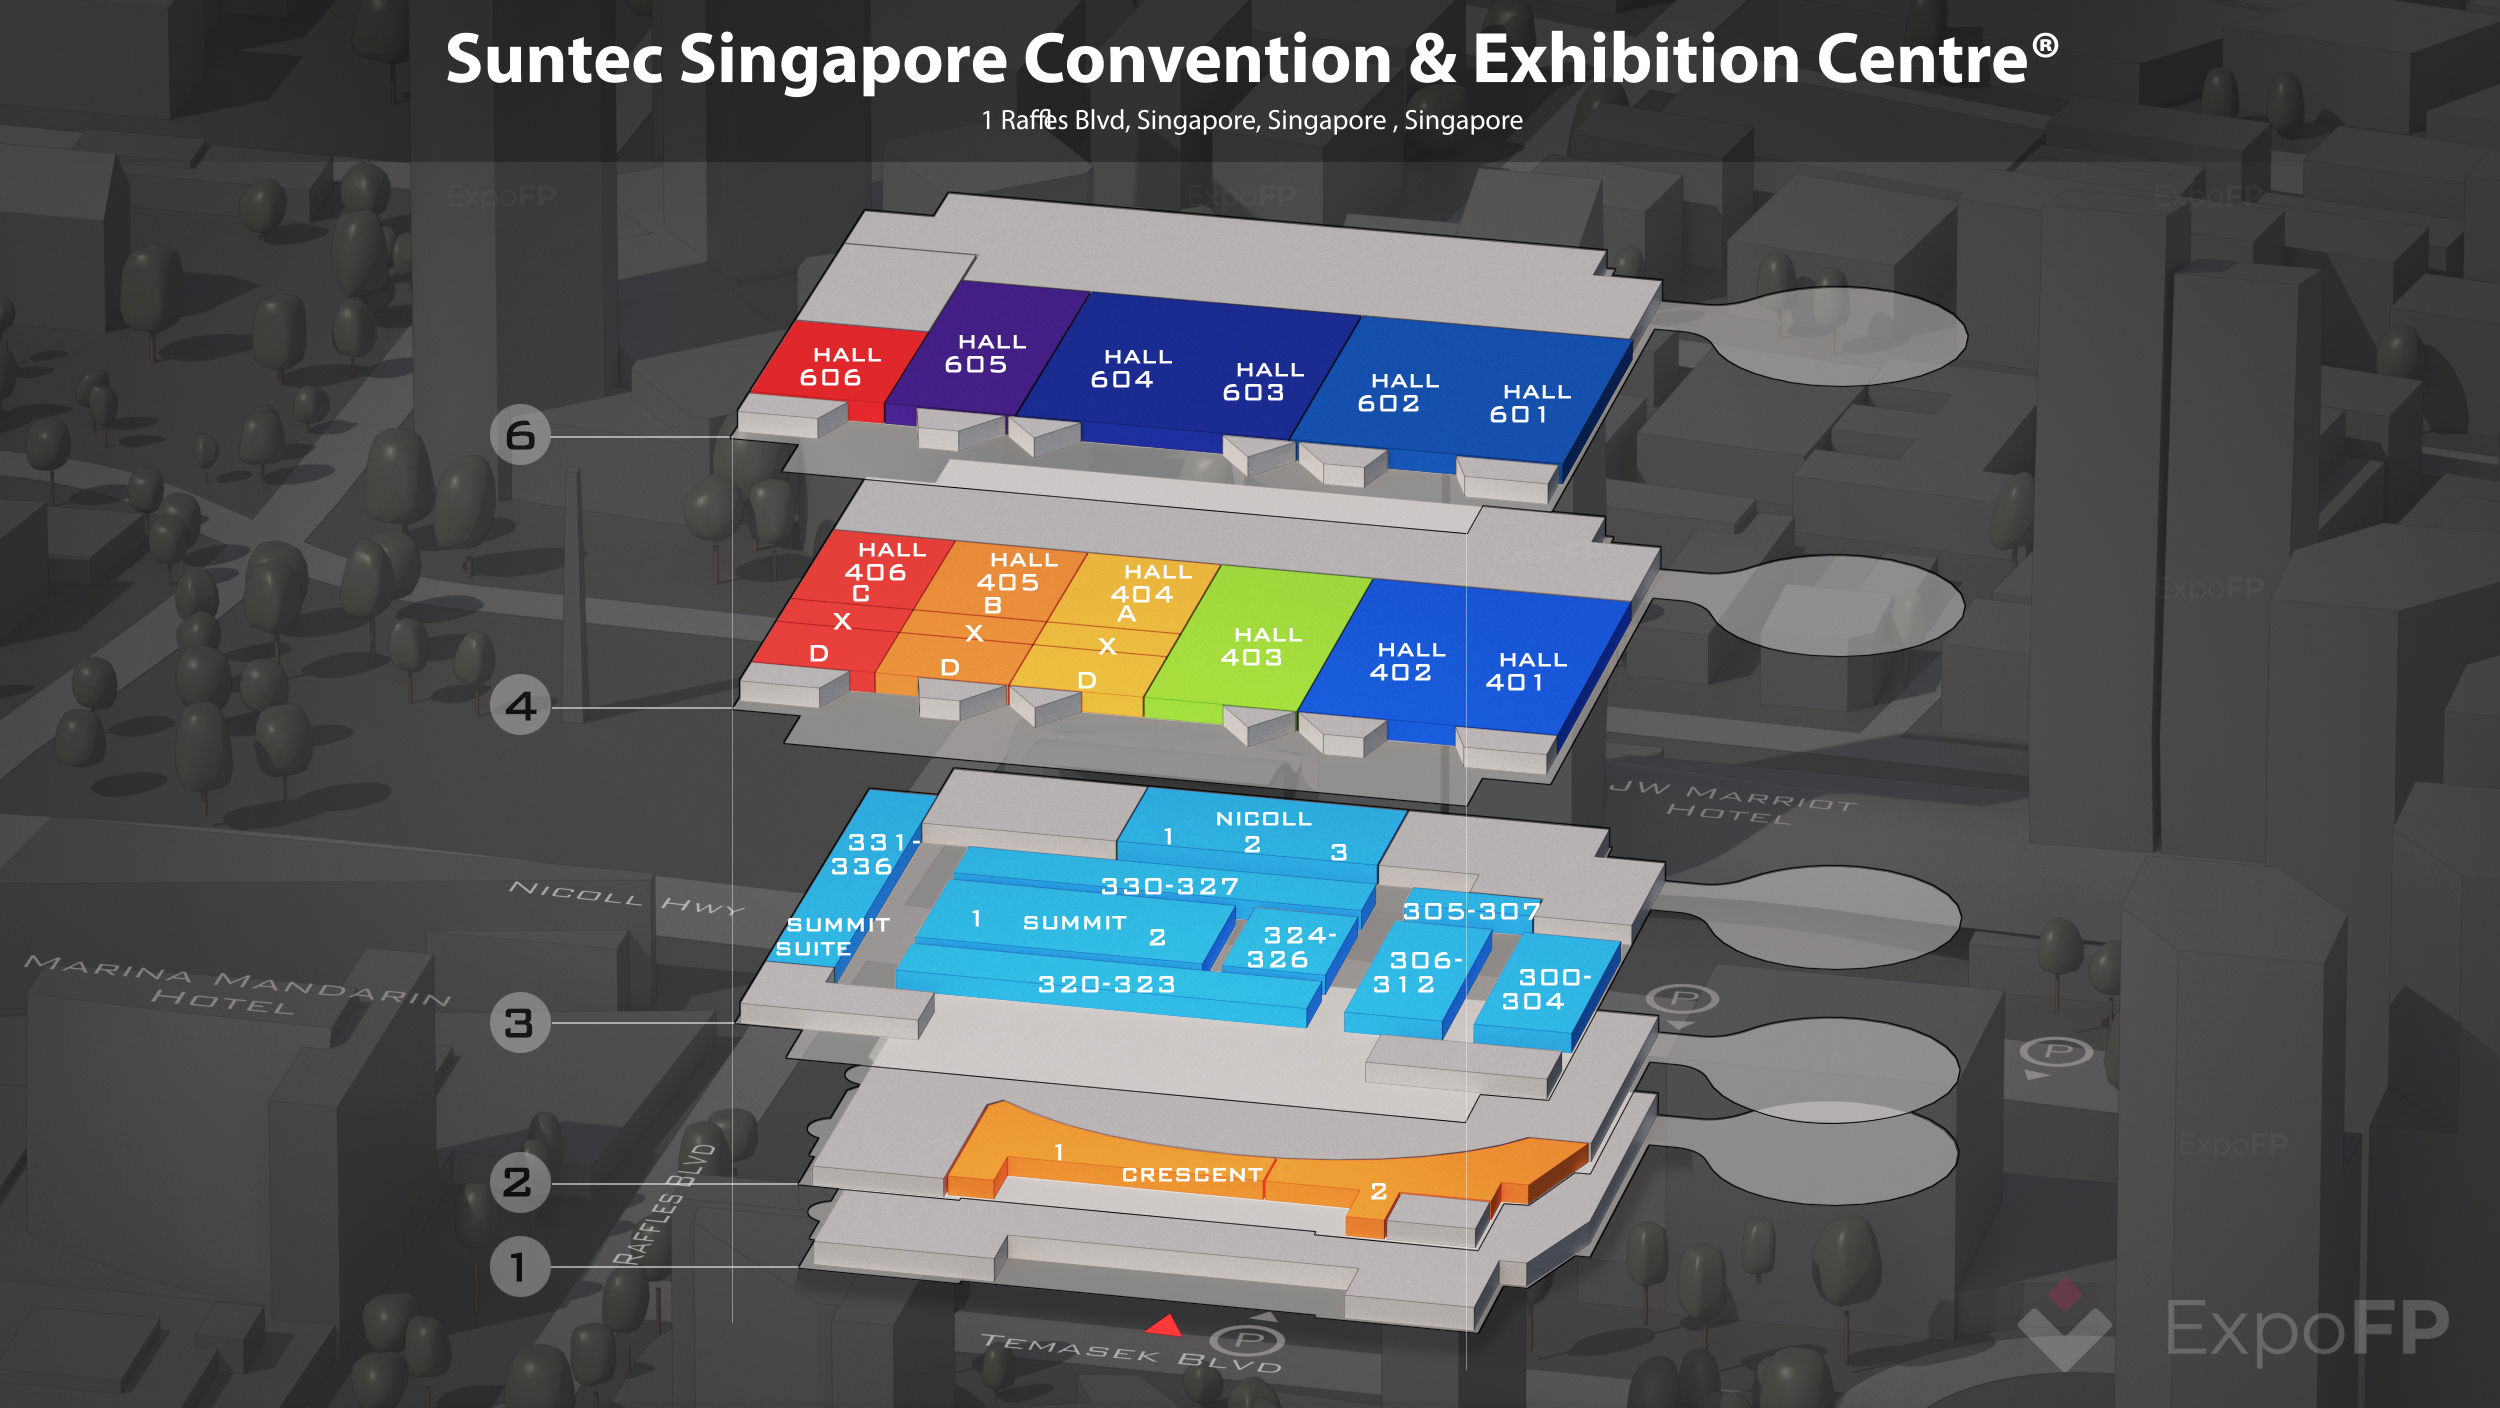 Suntec Singapore Convention & Exhibition Centre floor plan